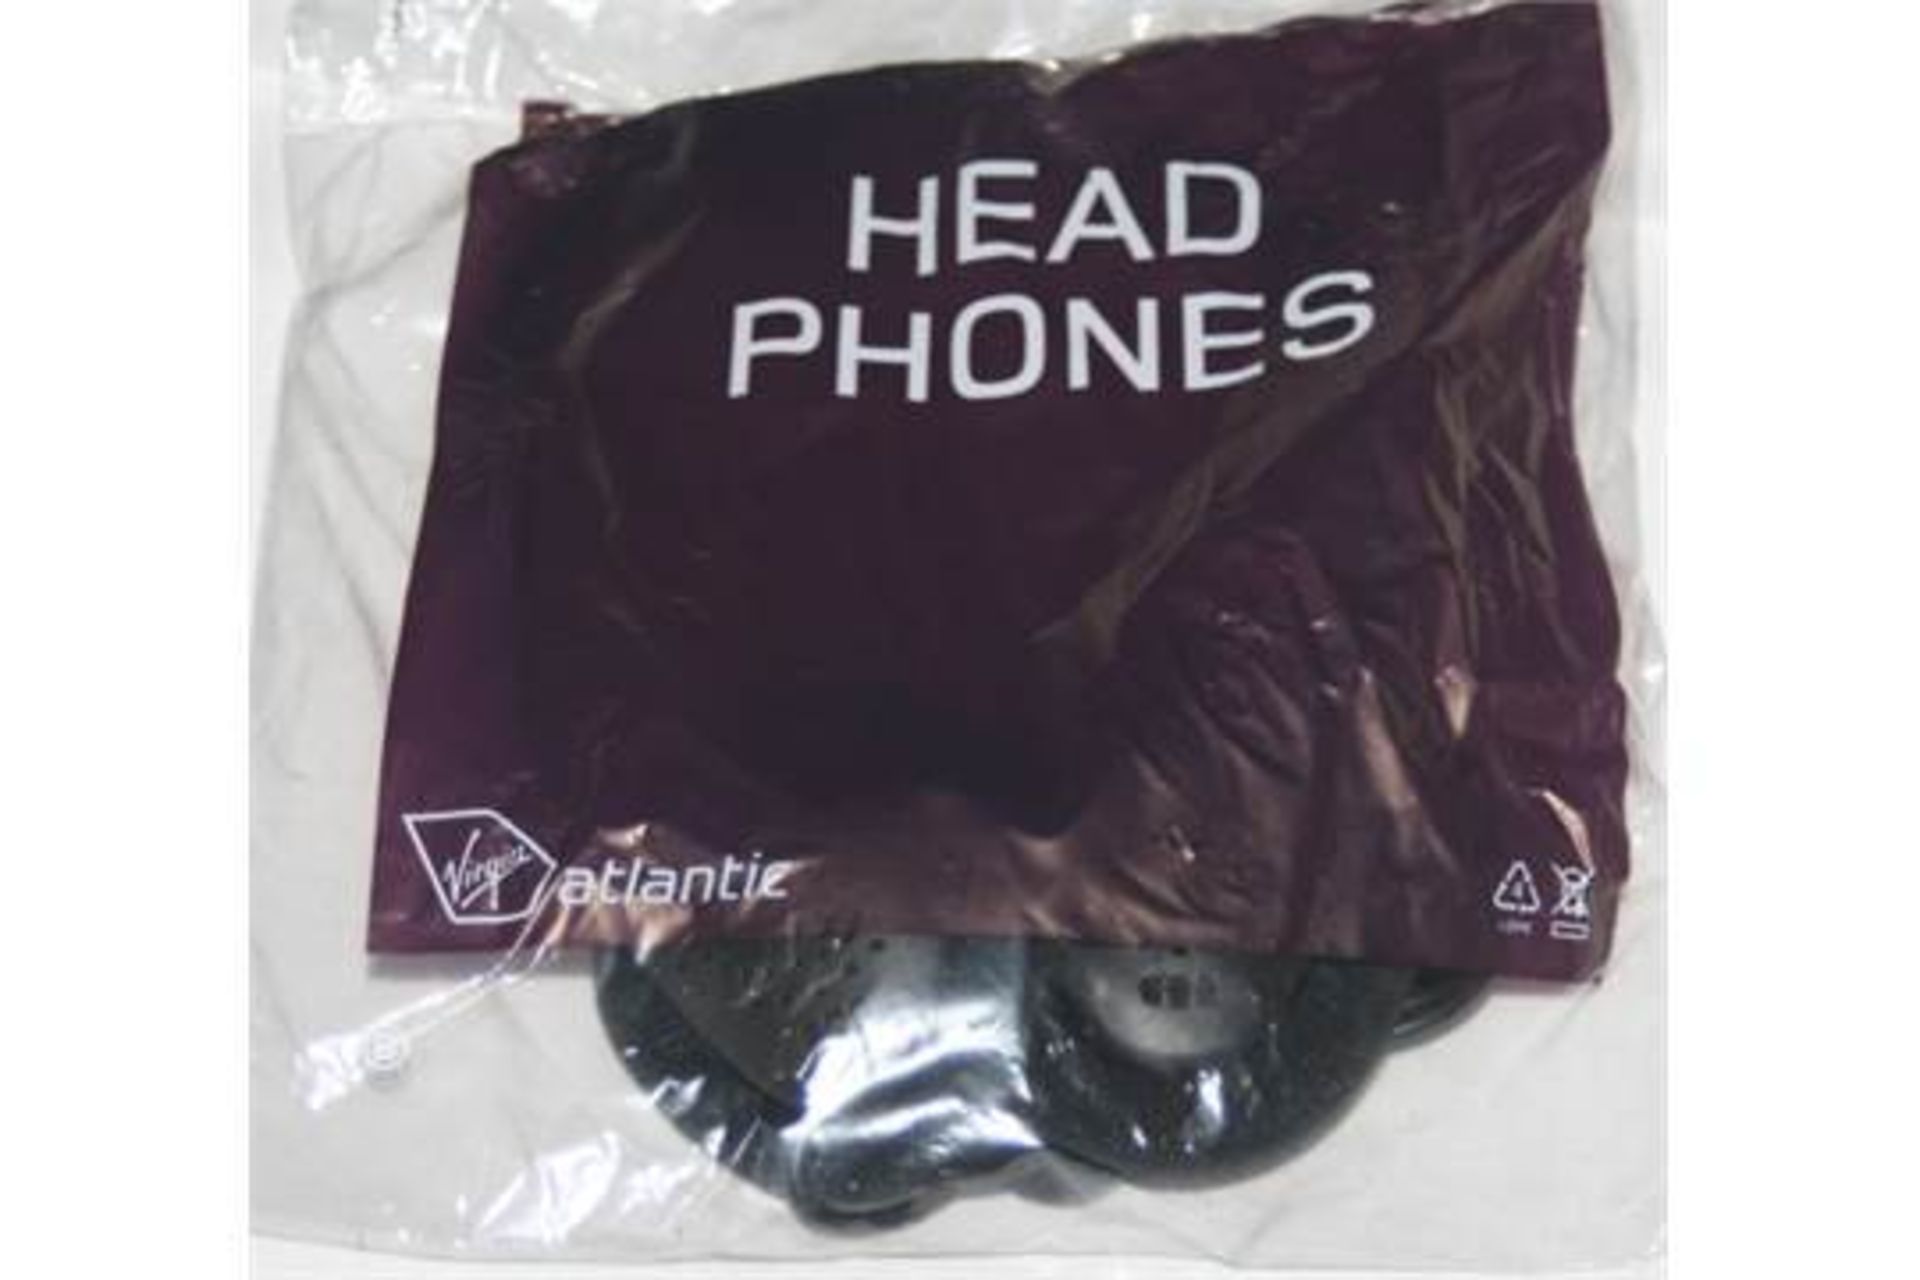 57 x Sets of Virgin Atlantic Earphones / Headphones With 3.5mm Jack Plugs - Brand New Stock - - Image 3 of 5